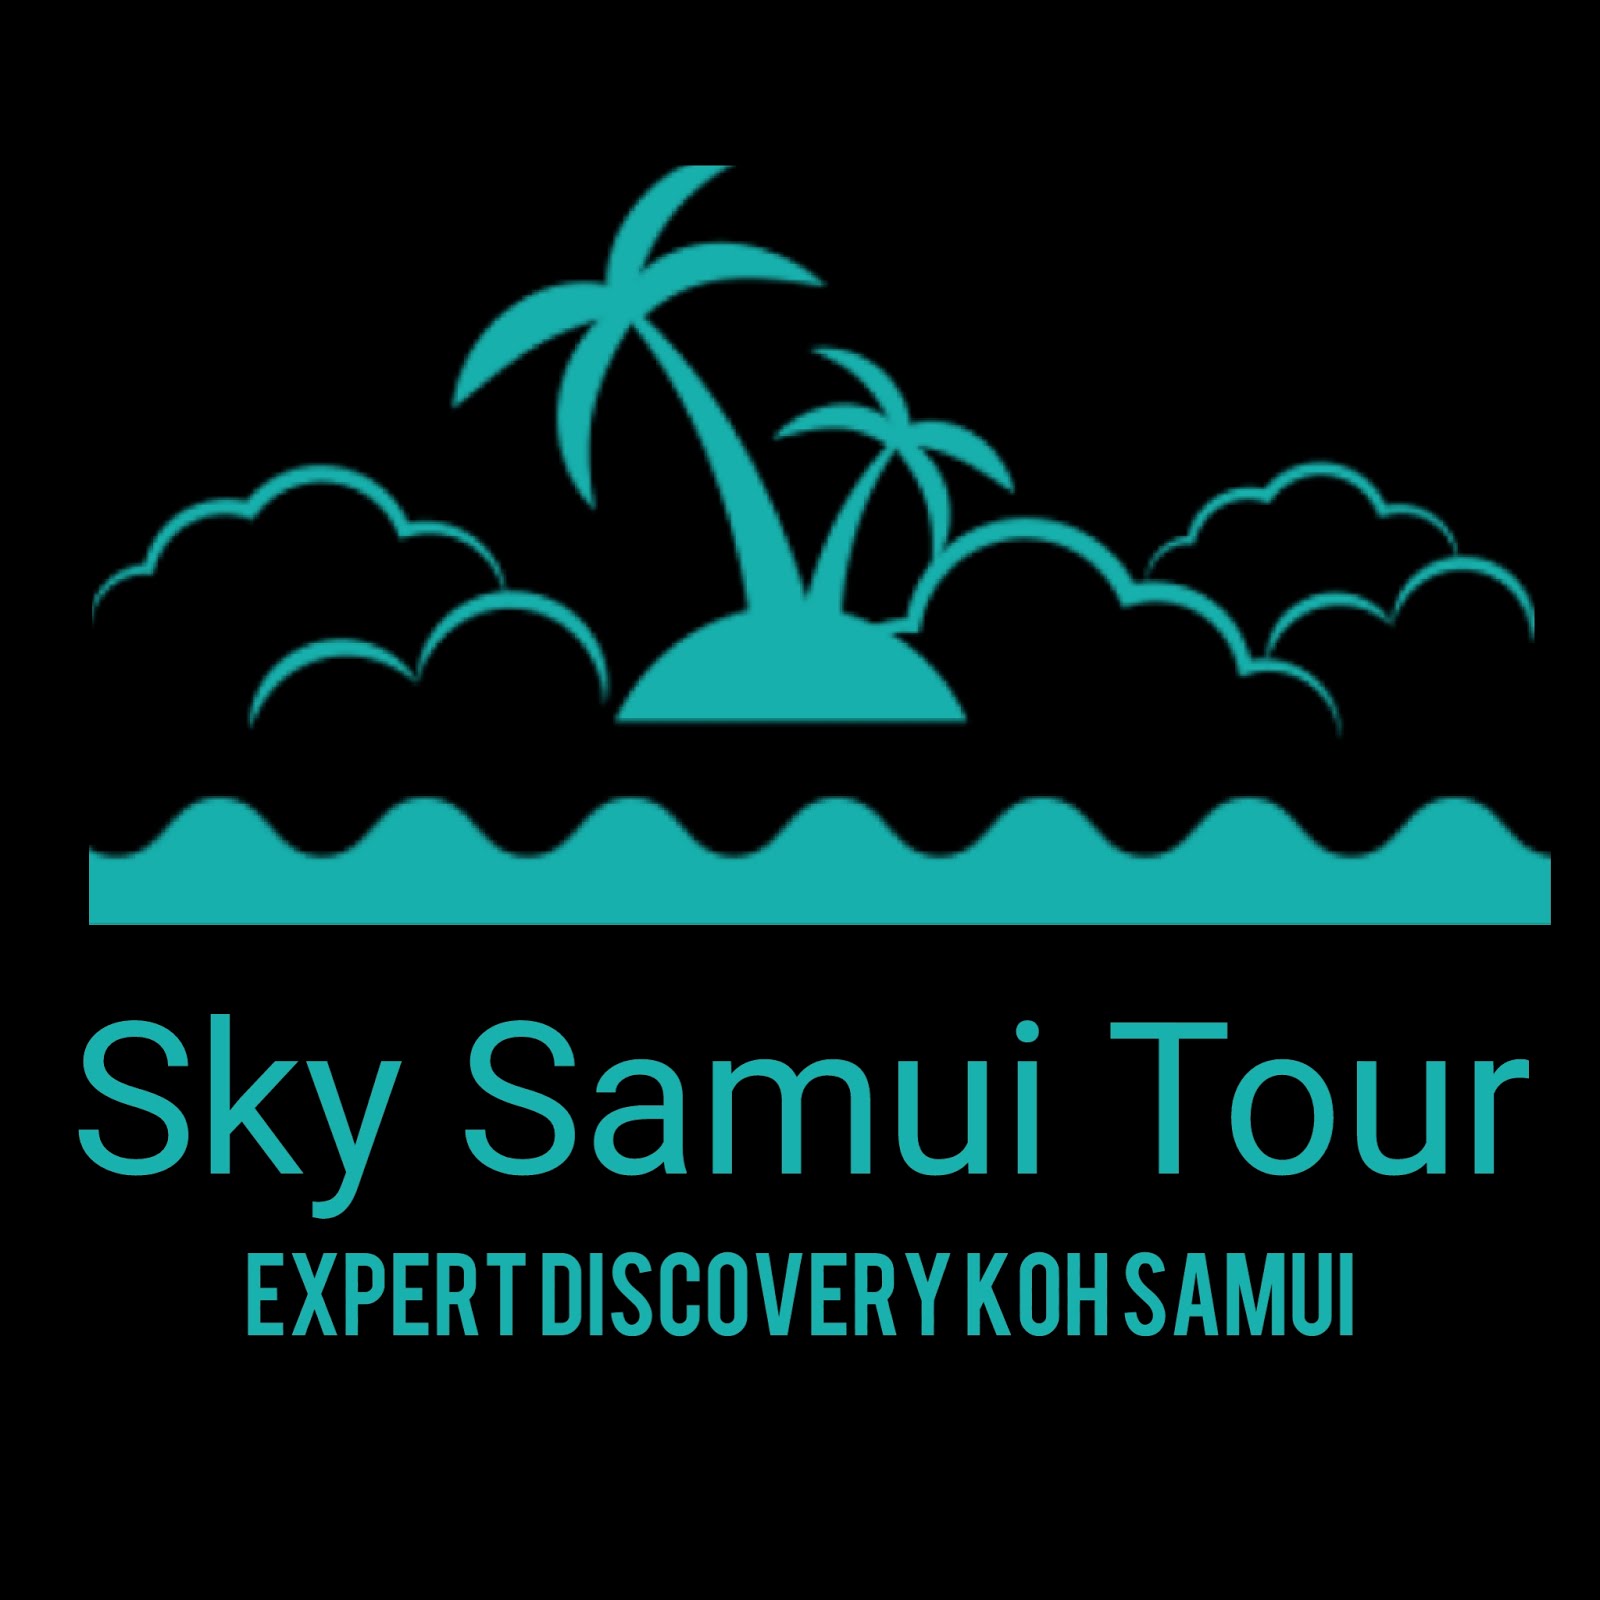 Sky Samui Tour